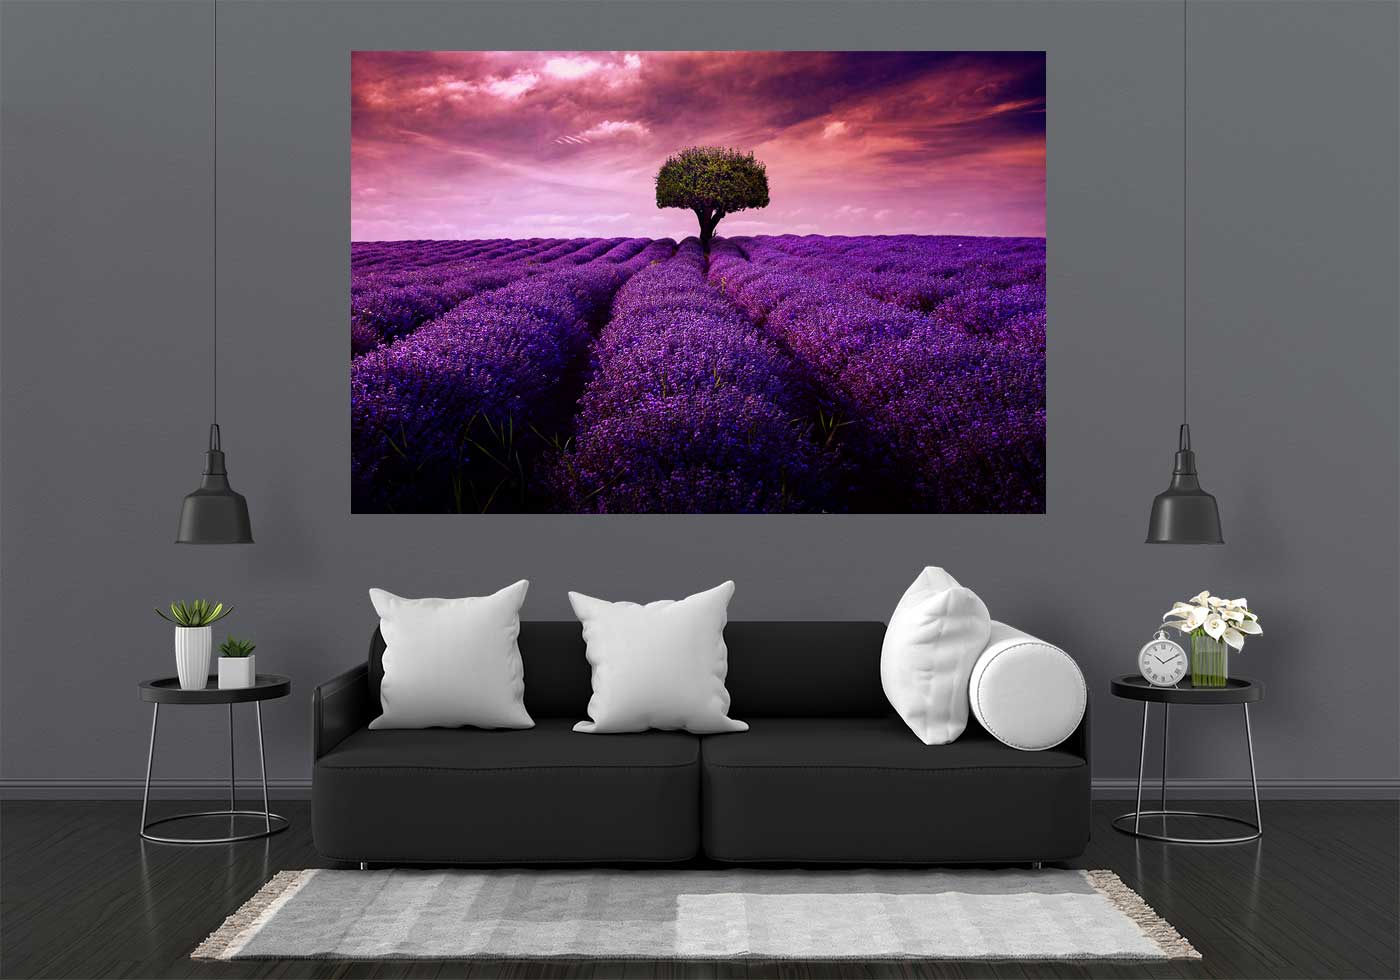 LED Bild Lavendelfeld – LED Textilspannrahmen Bilder